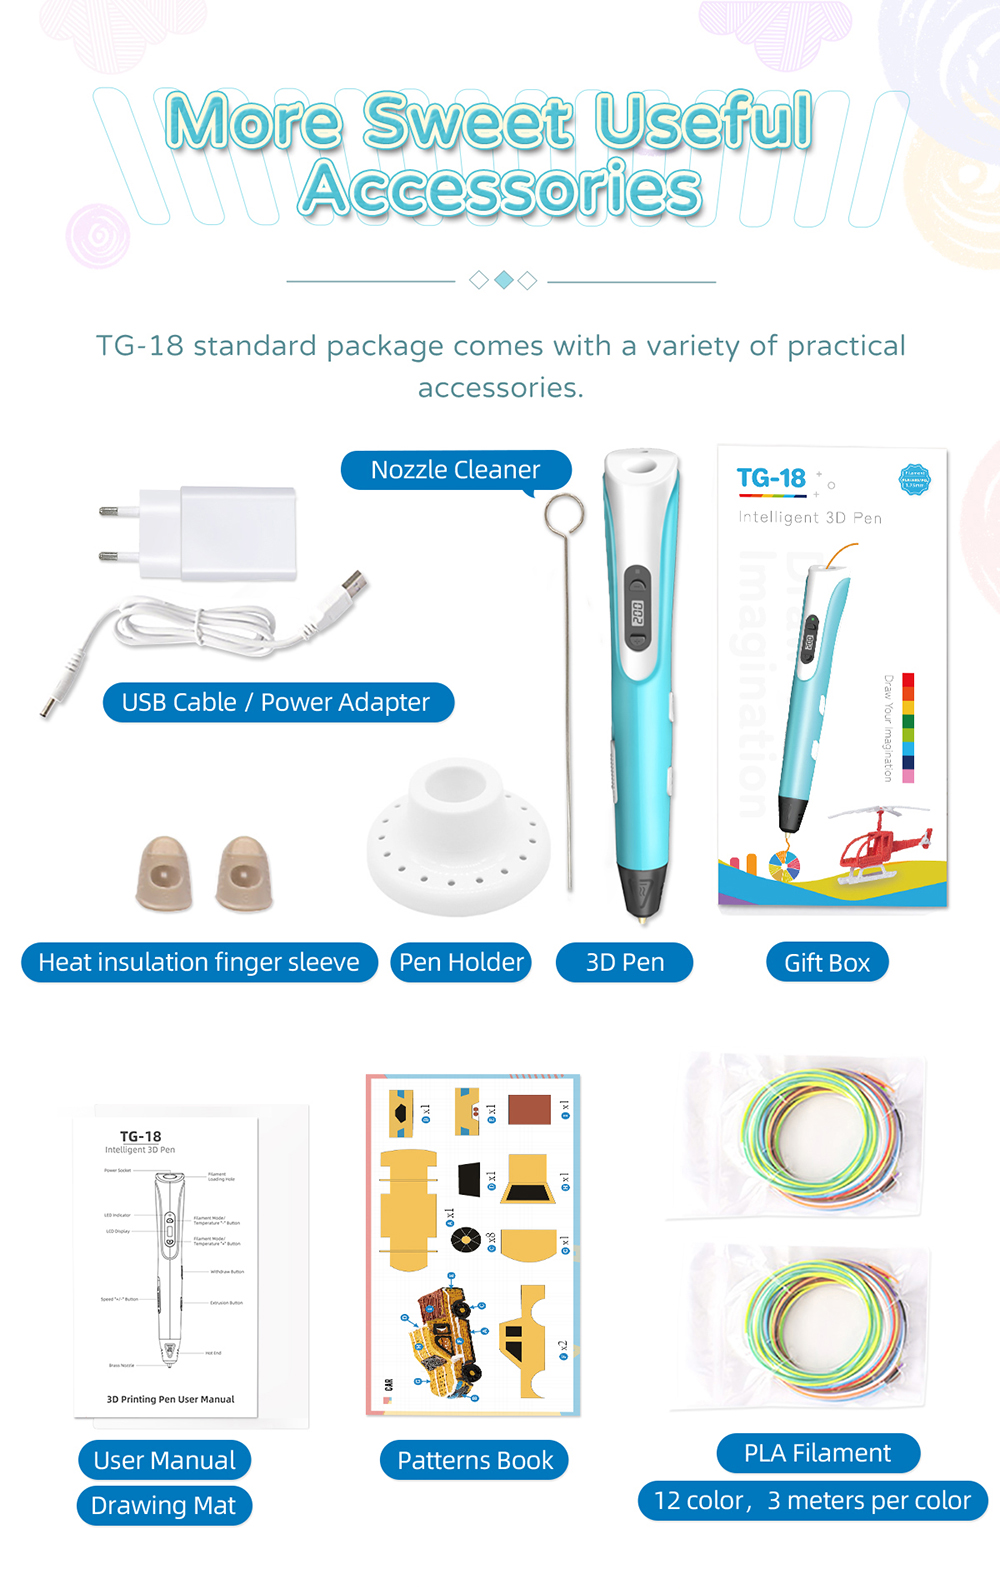 geeetech TG-18 3D Printing Pen description  of  accessories